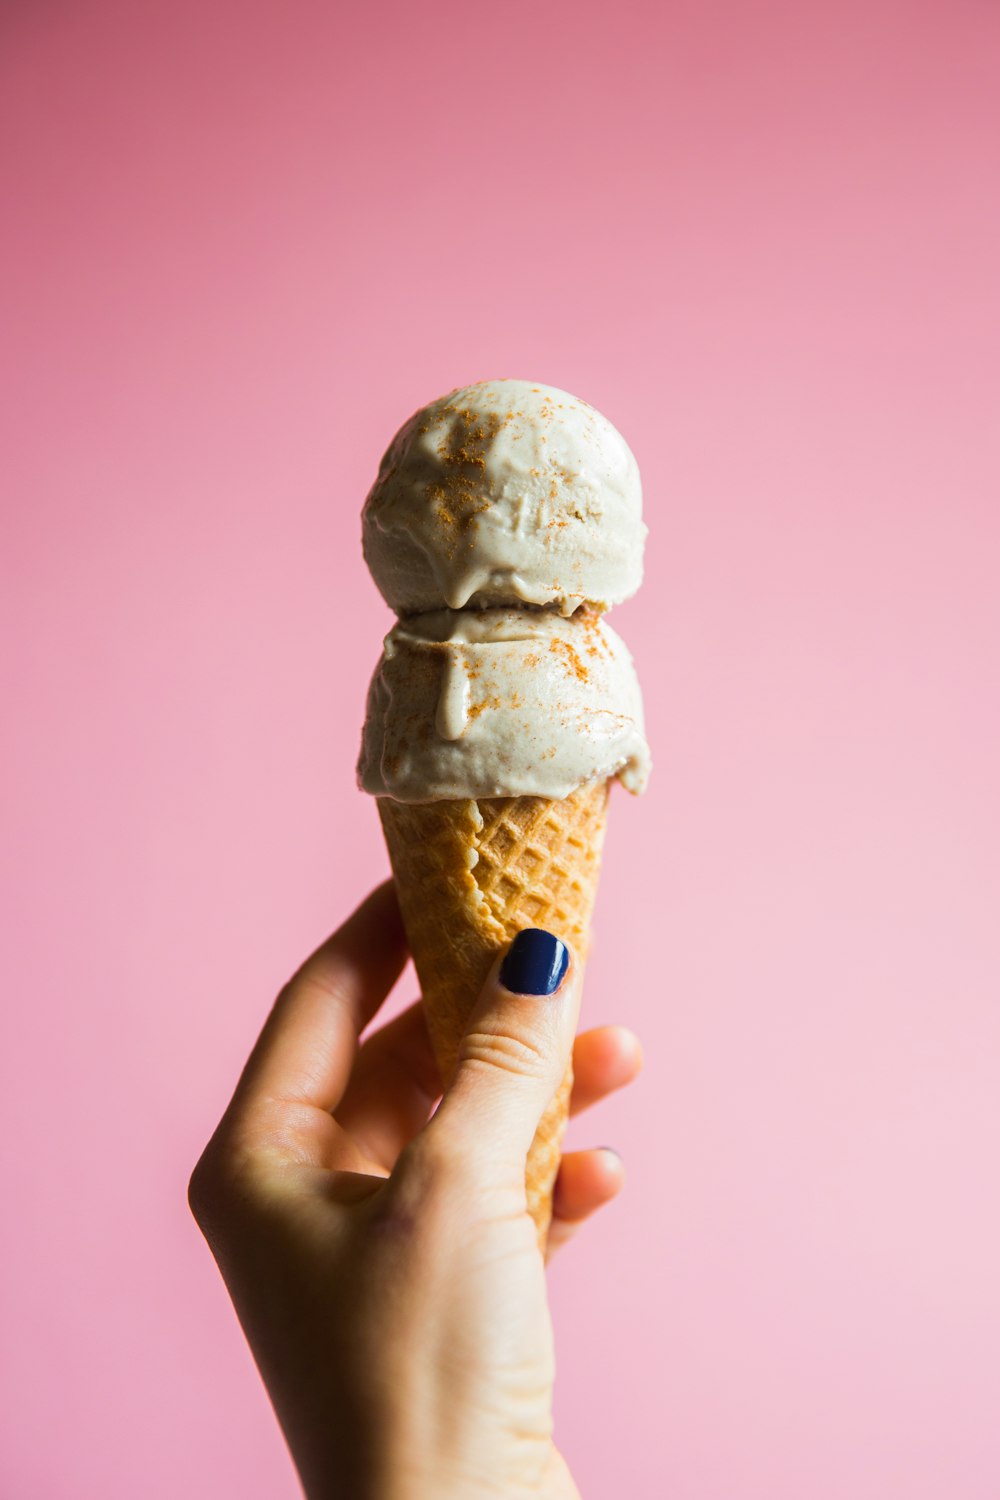 person holding ice cream on cone